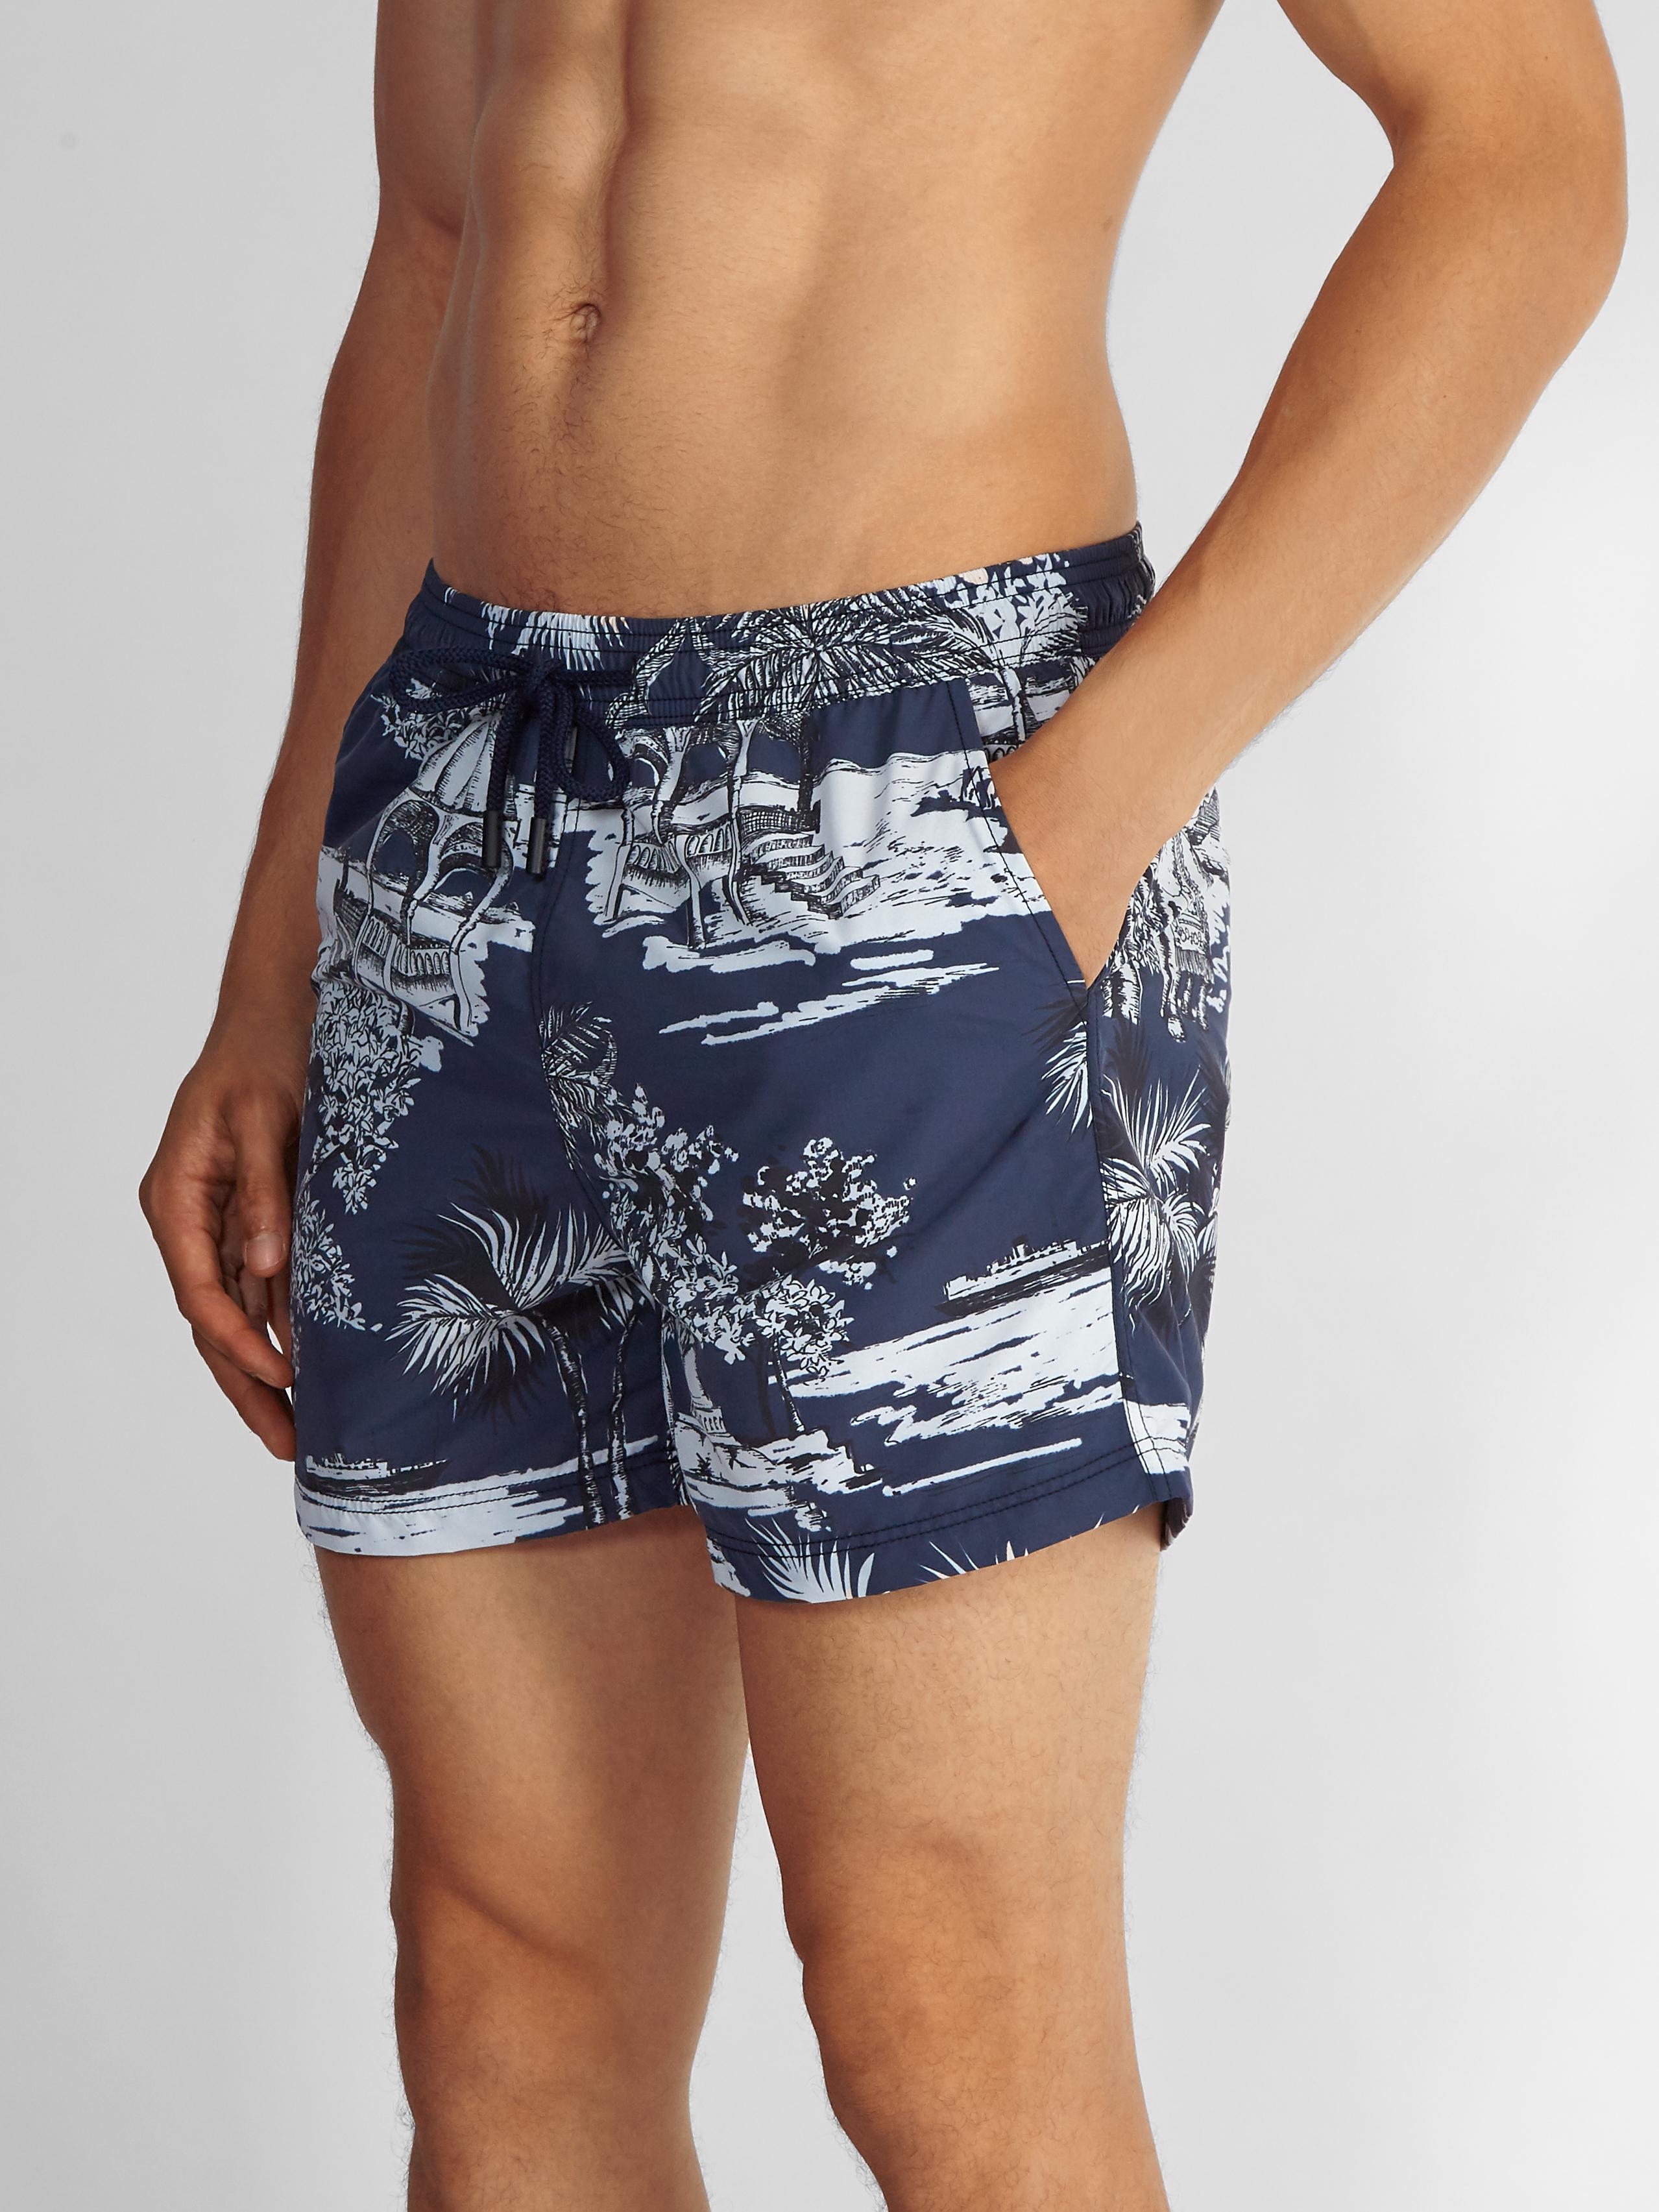 Lyst - Etro Hawaii-print Swim Shorts in Blue for Men